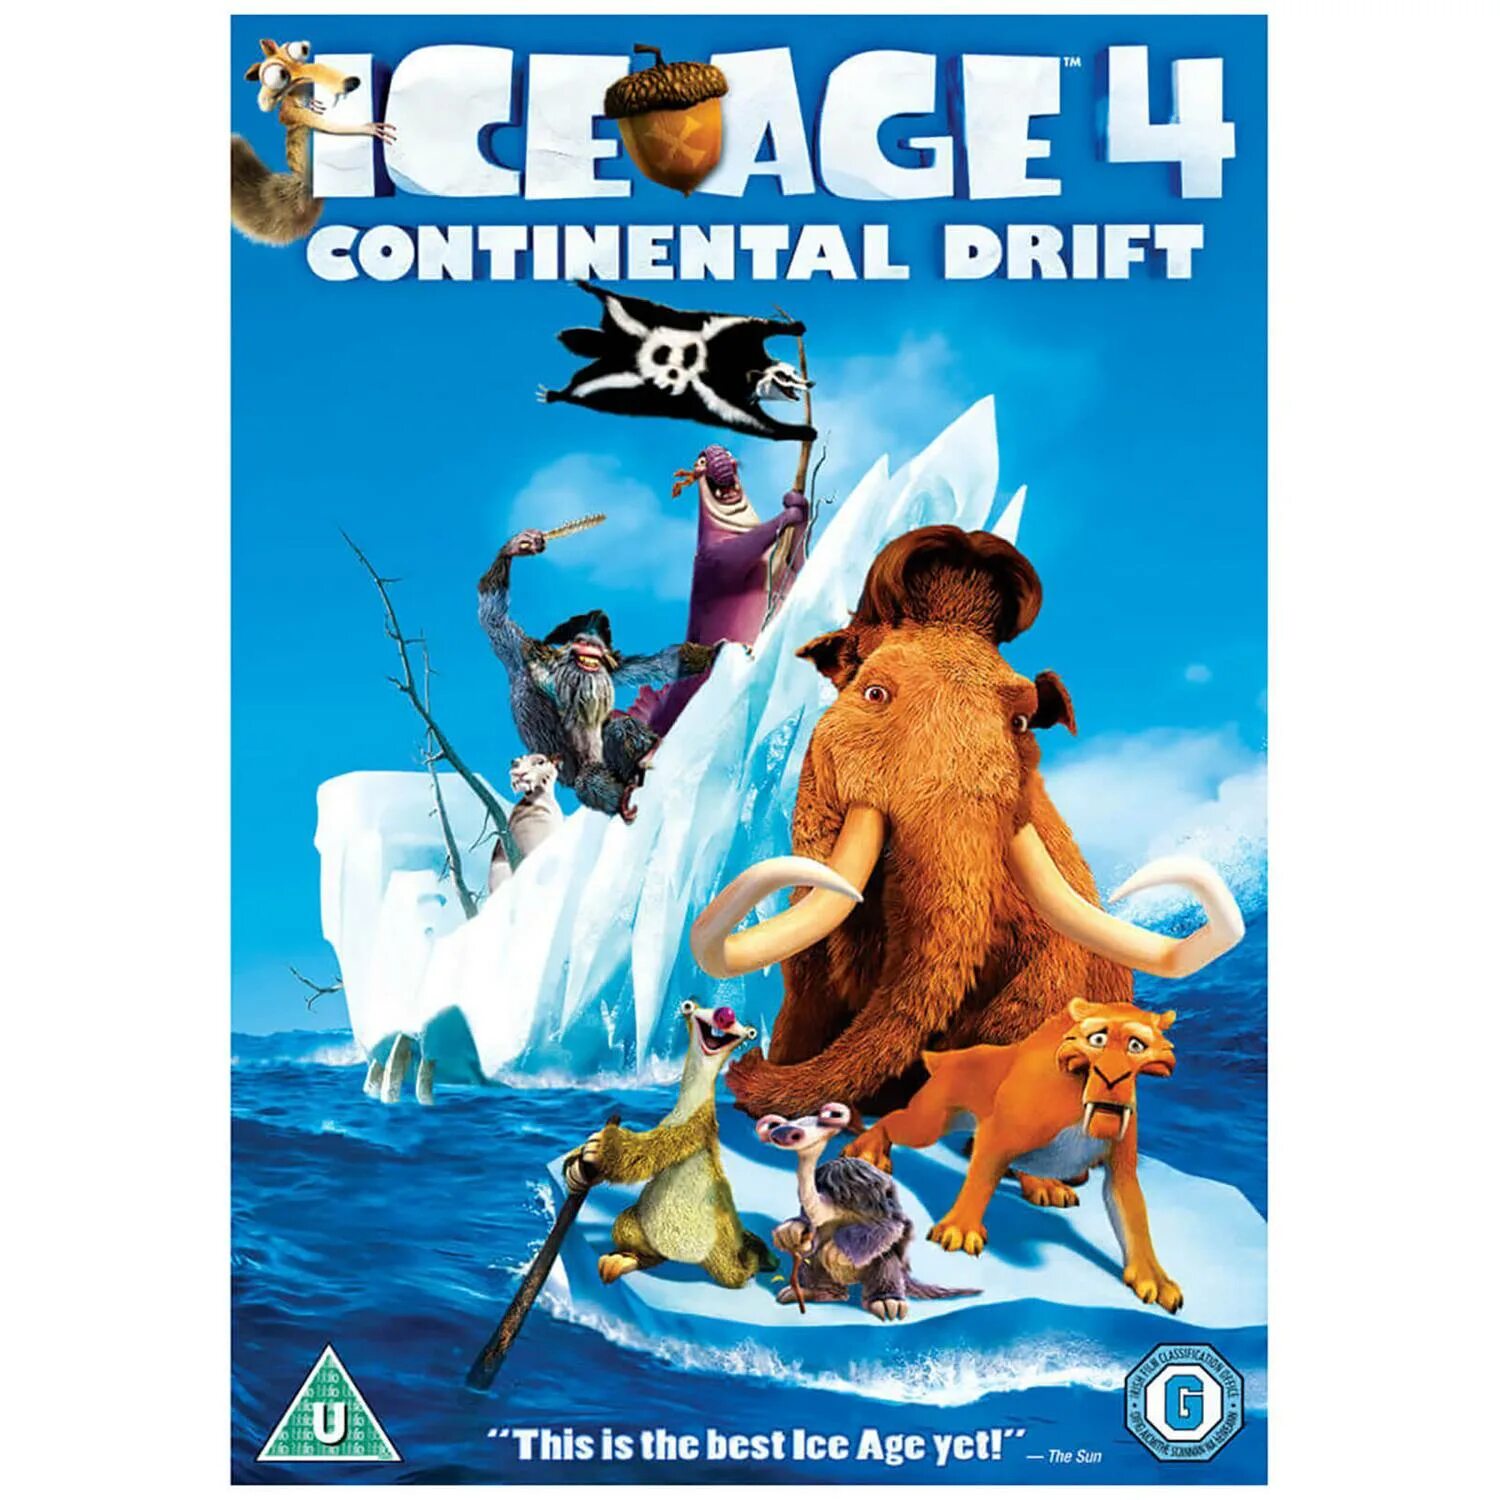 Ice age 4 Continental. Ice age 4 Continental Drift 2012. Ice age 4 Continental Drift DVD. Ice age 4 Continental Drift 2012 Blu ray.